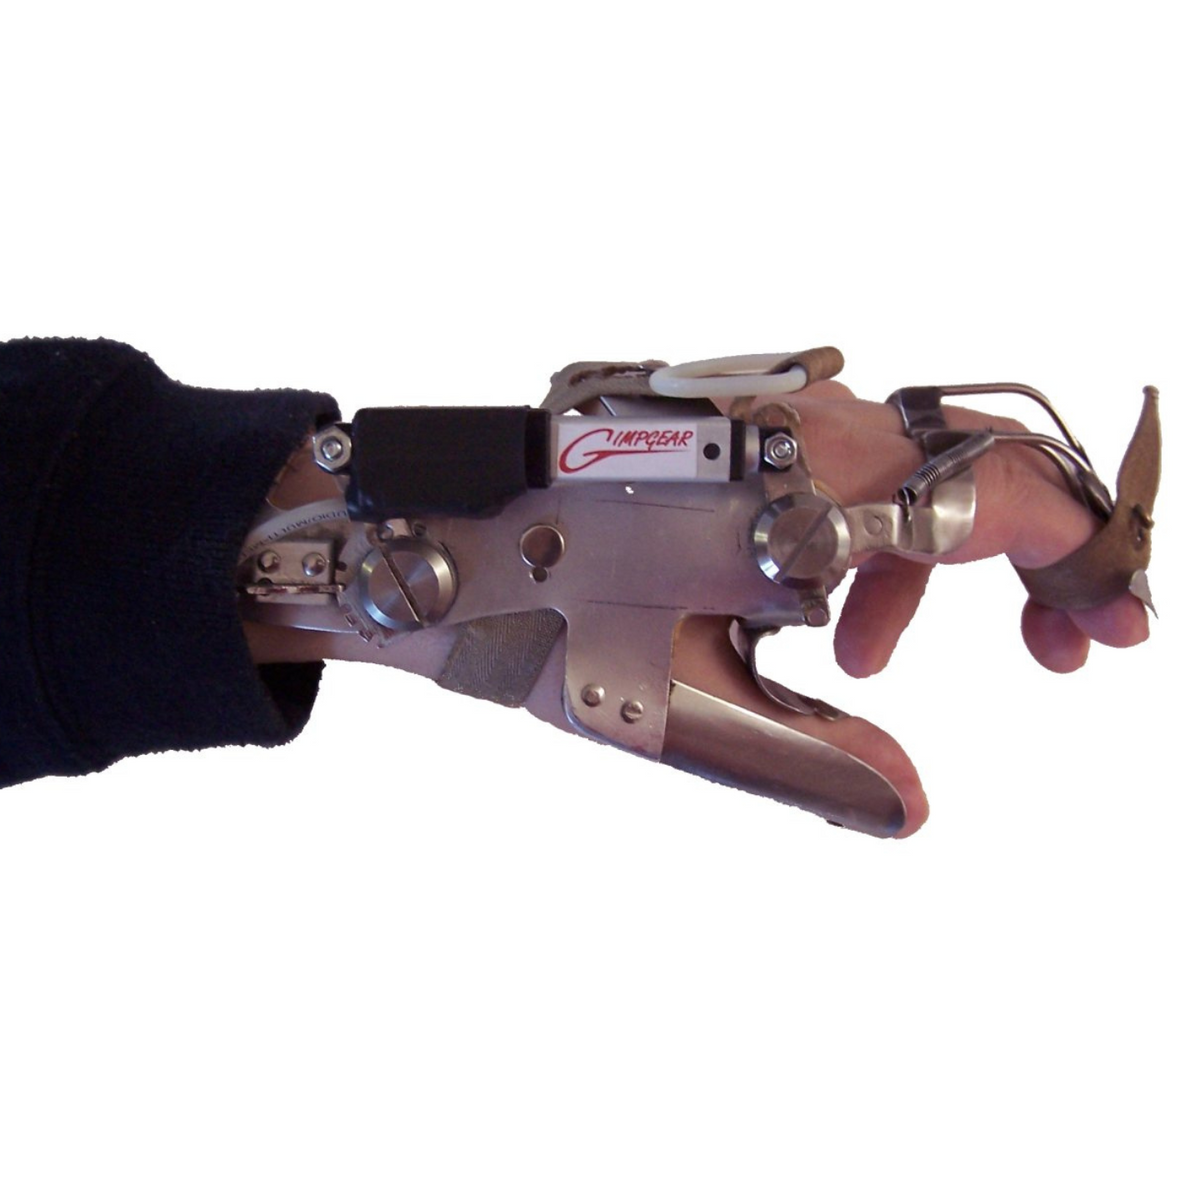 Orthosis PowerGrip: guante de exoesqueleto de agarre